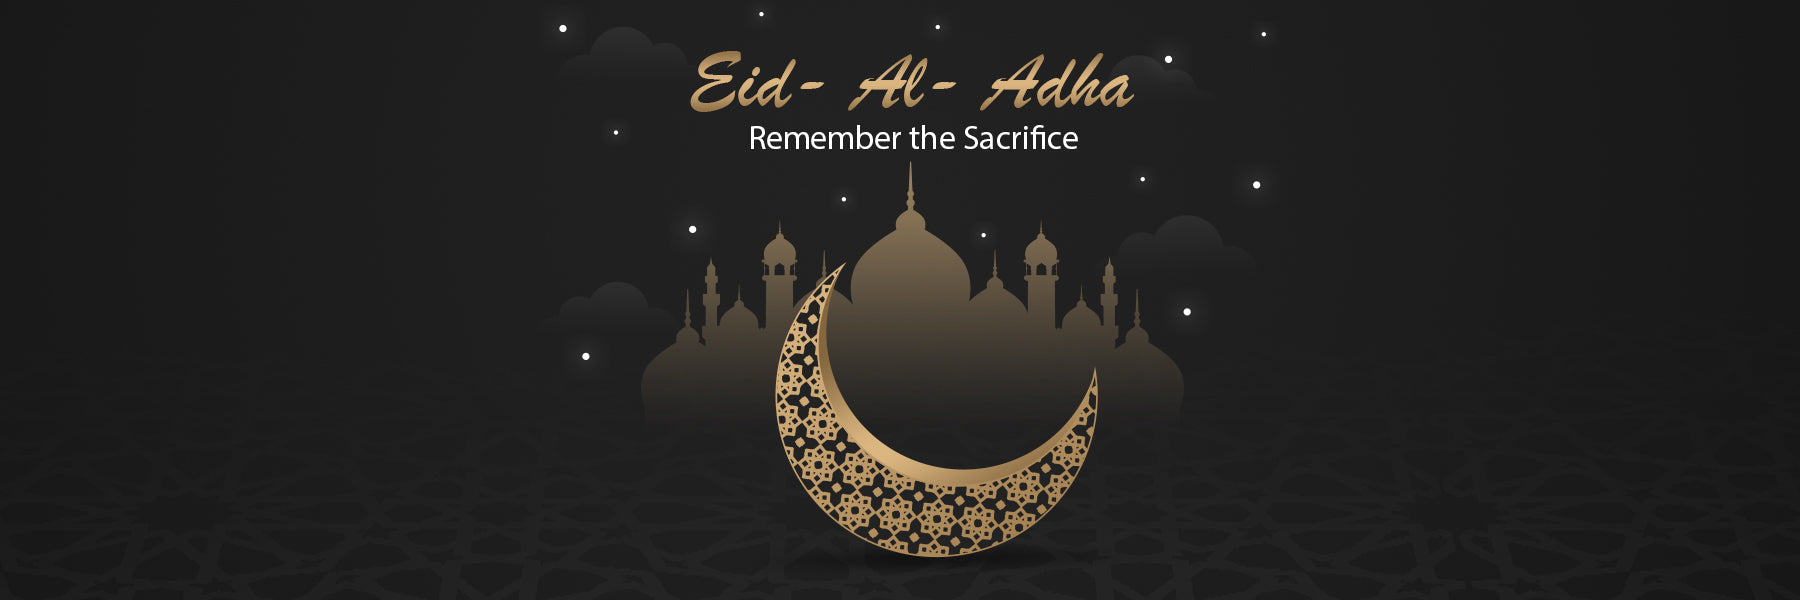 Eid- Al- Adha- Remember the Sacrifice! FromIndia.com